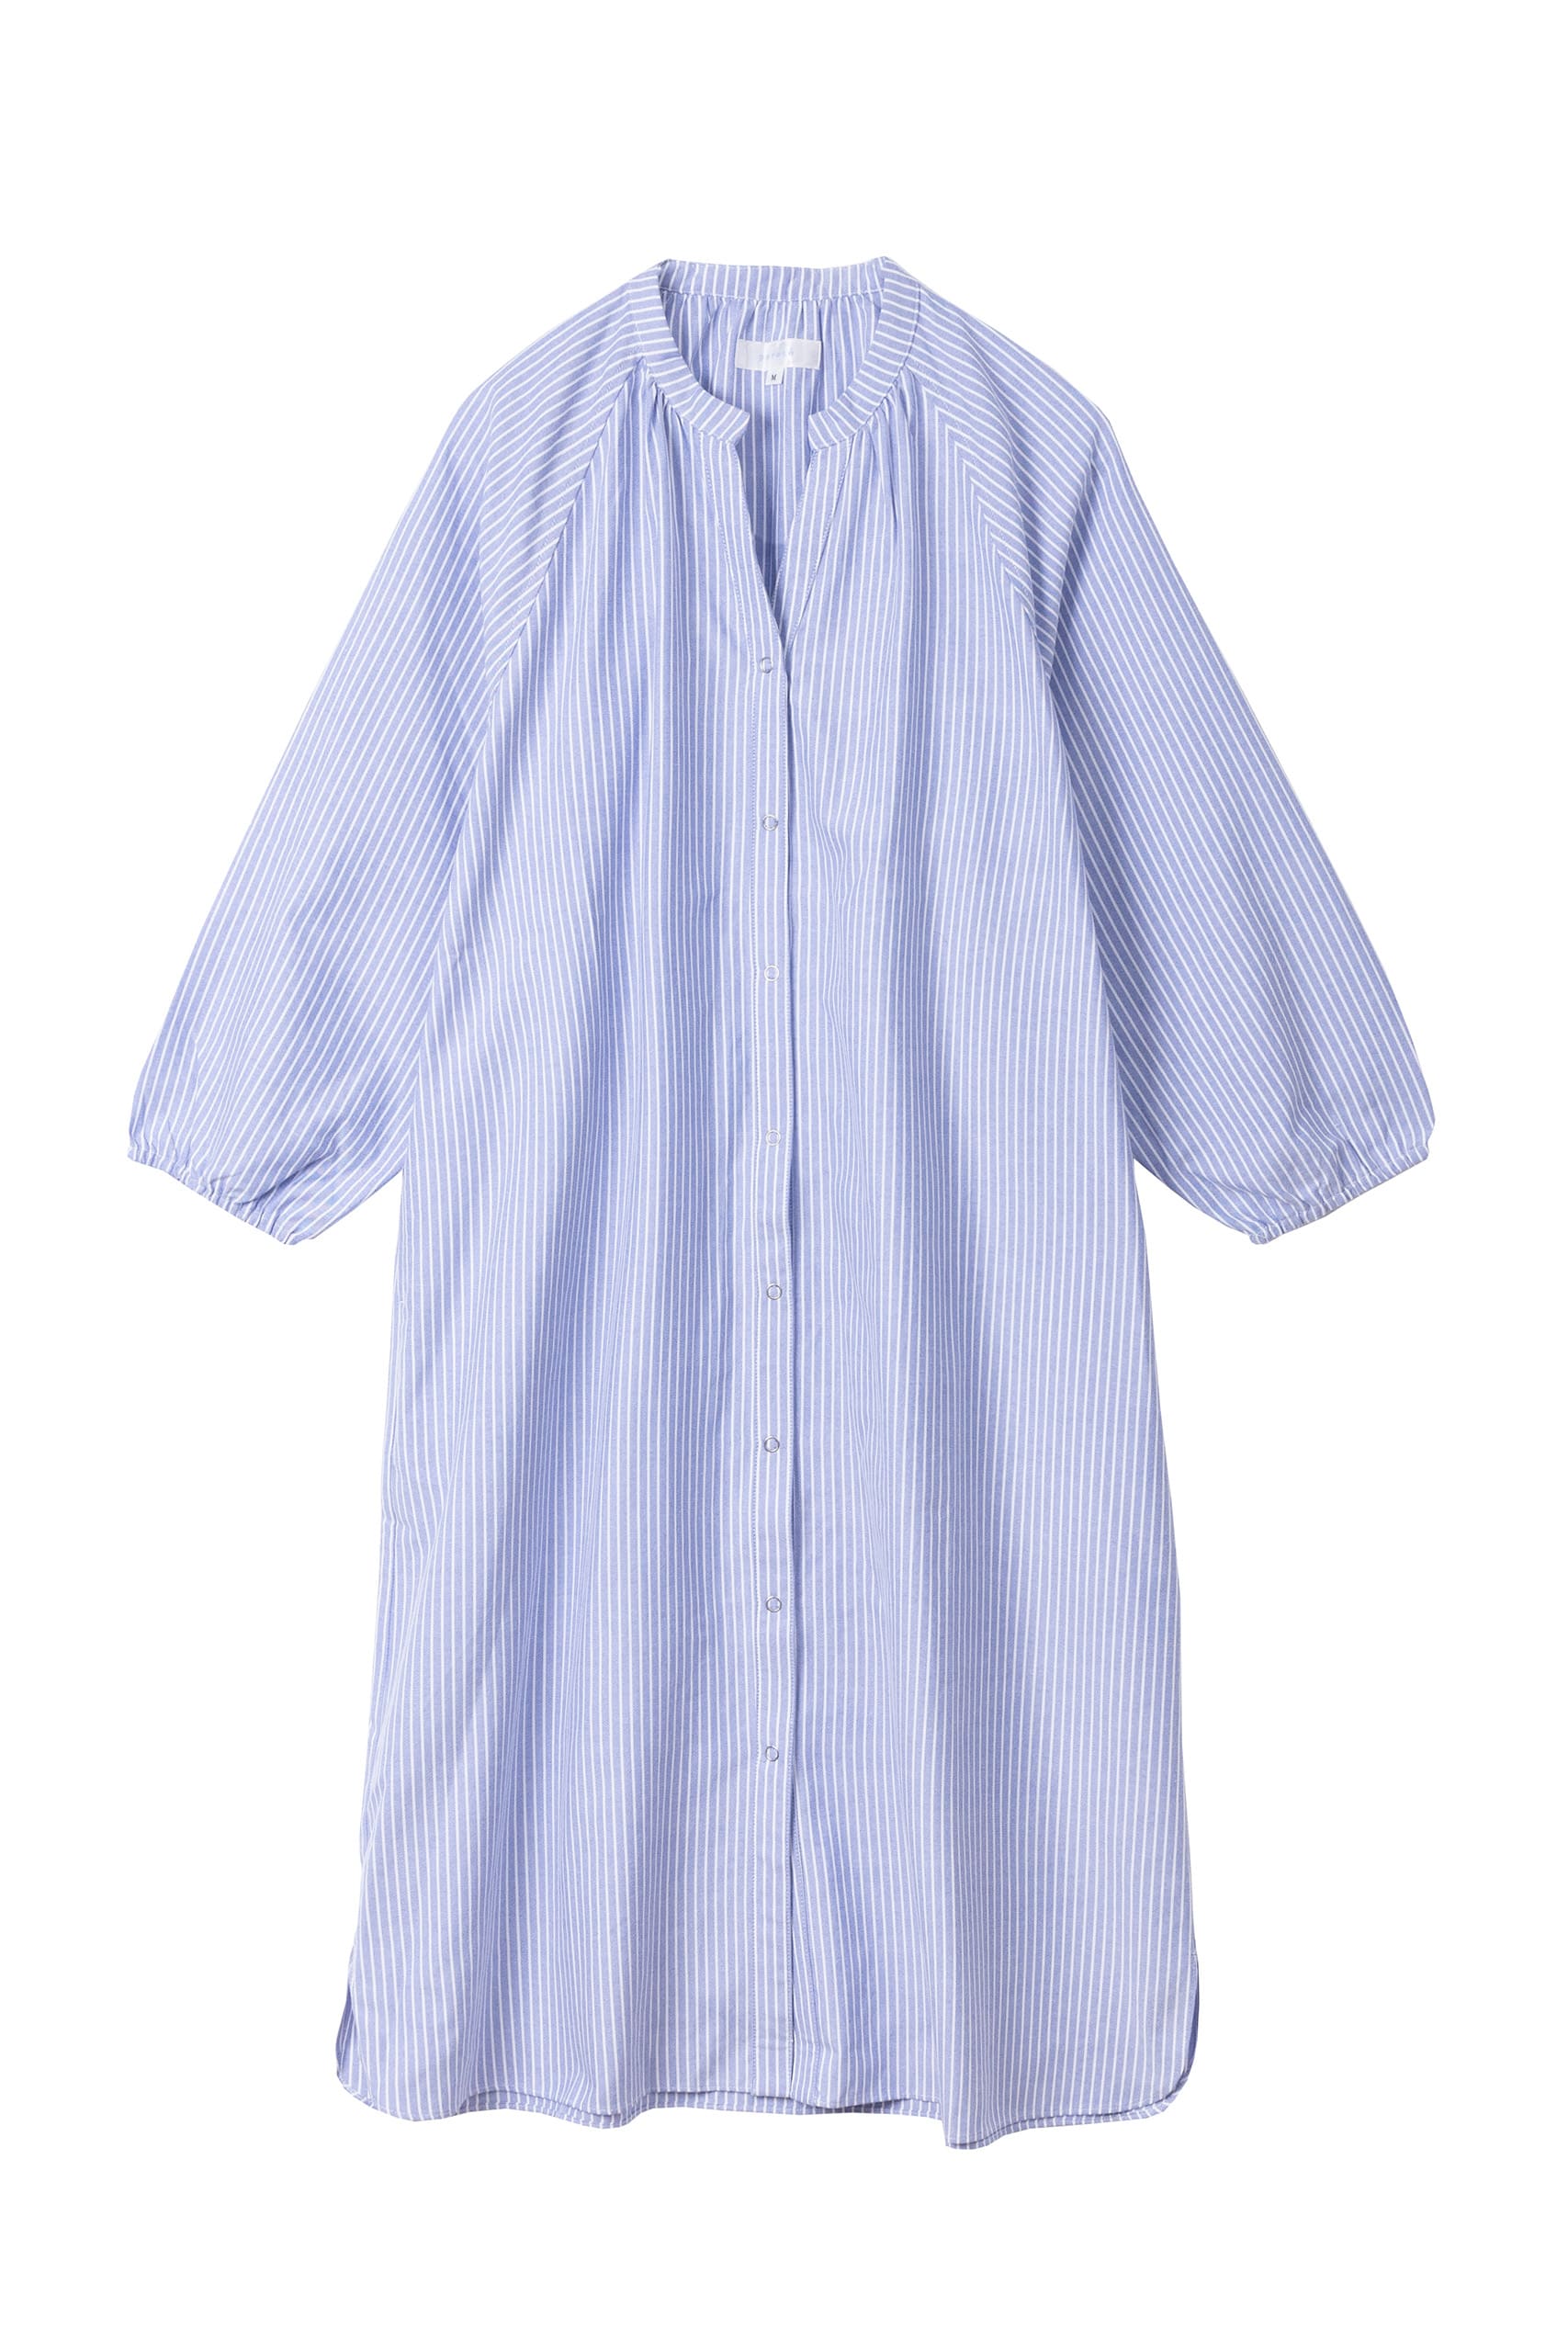 【P01】ストライプシャツパジャマ